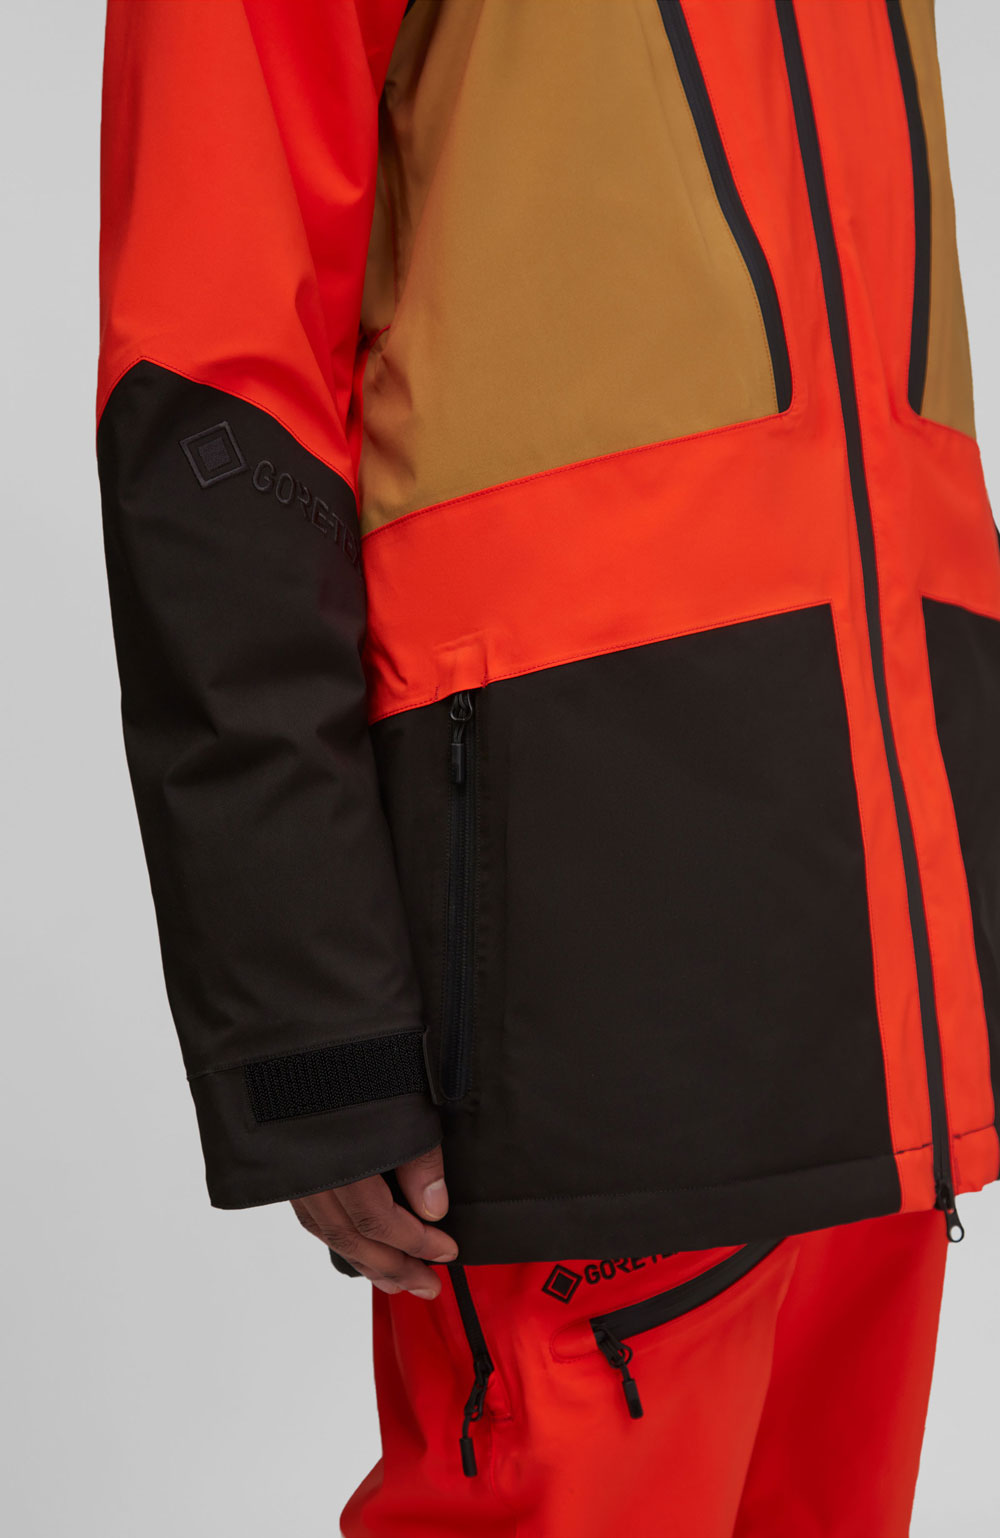 Men’s ski/snowboard jacket